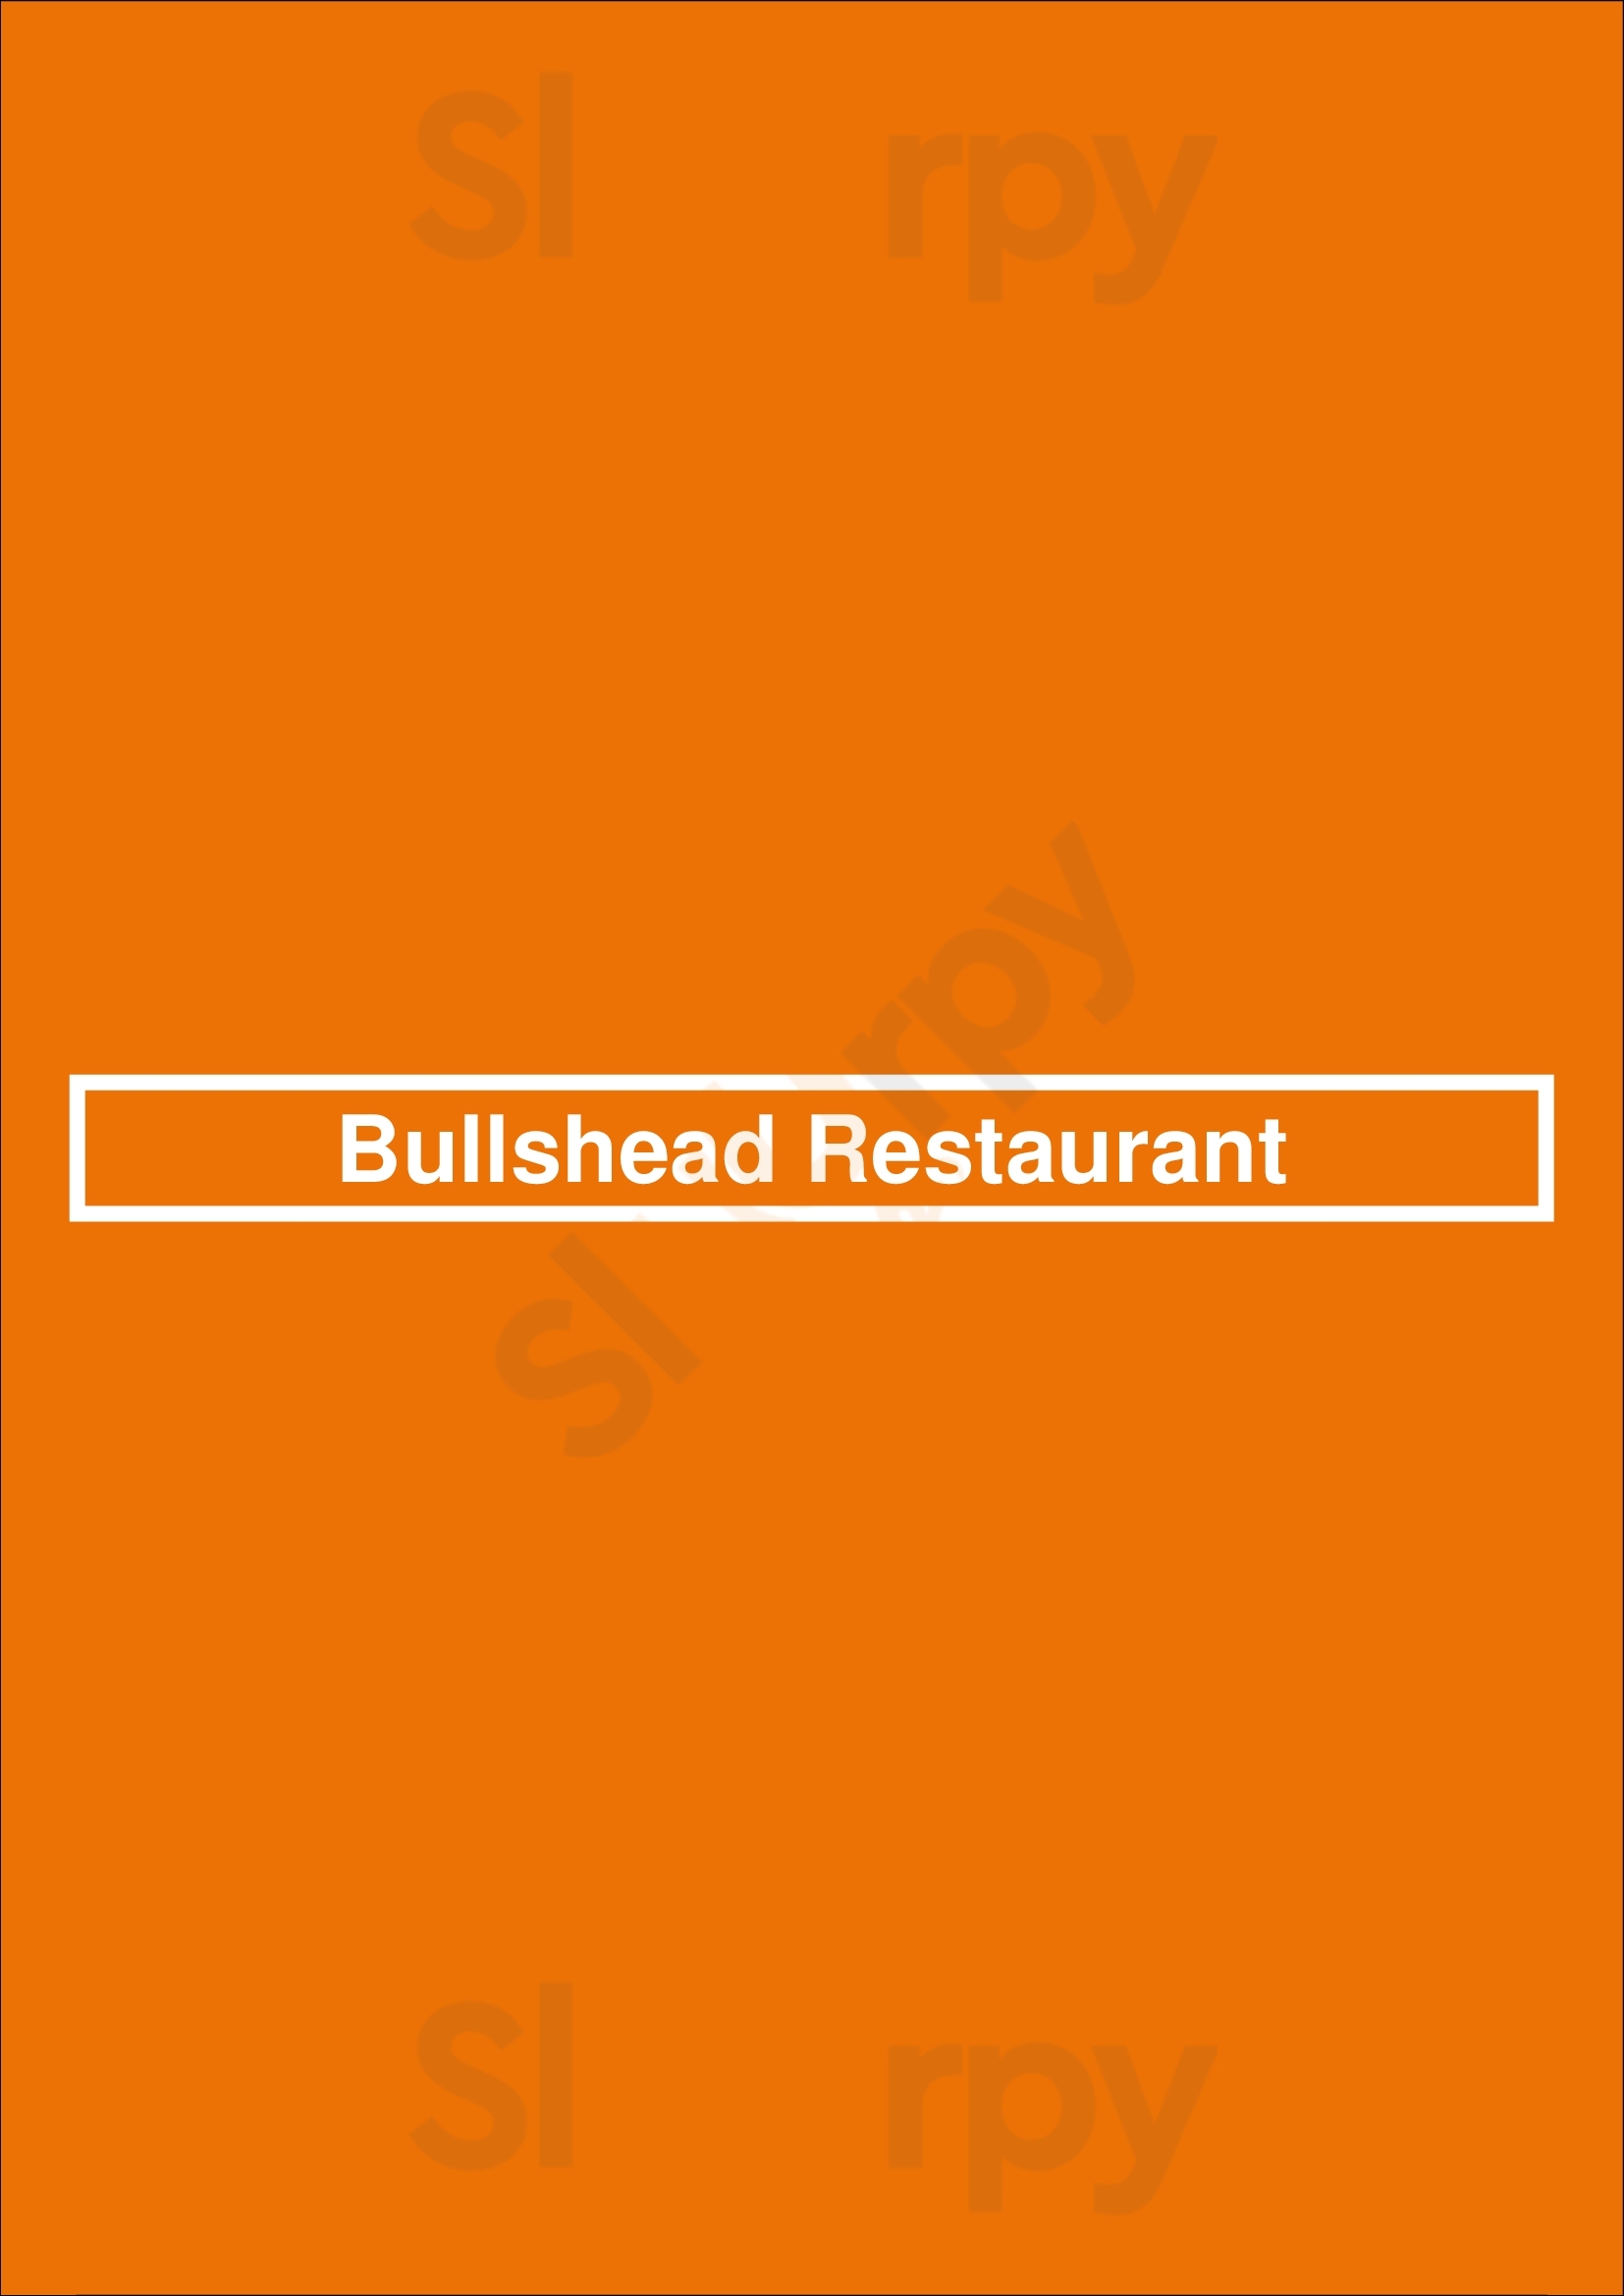 Bullshead Restaurant San Francisco Menu - 1